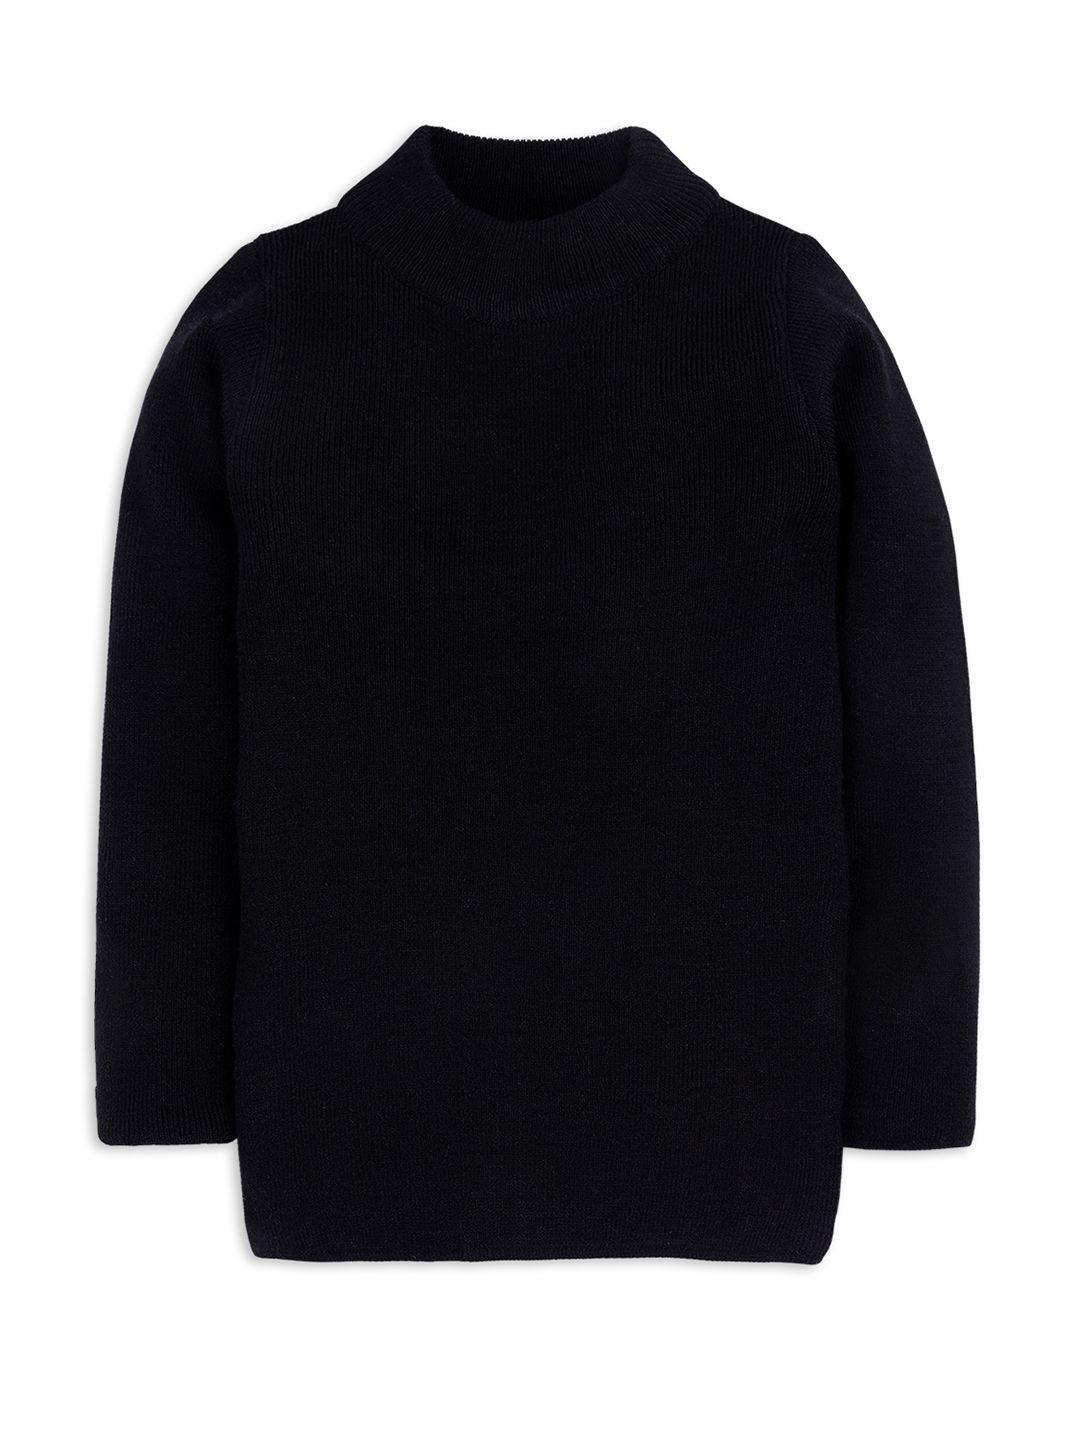 rvk kids black solid pullover sweater